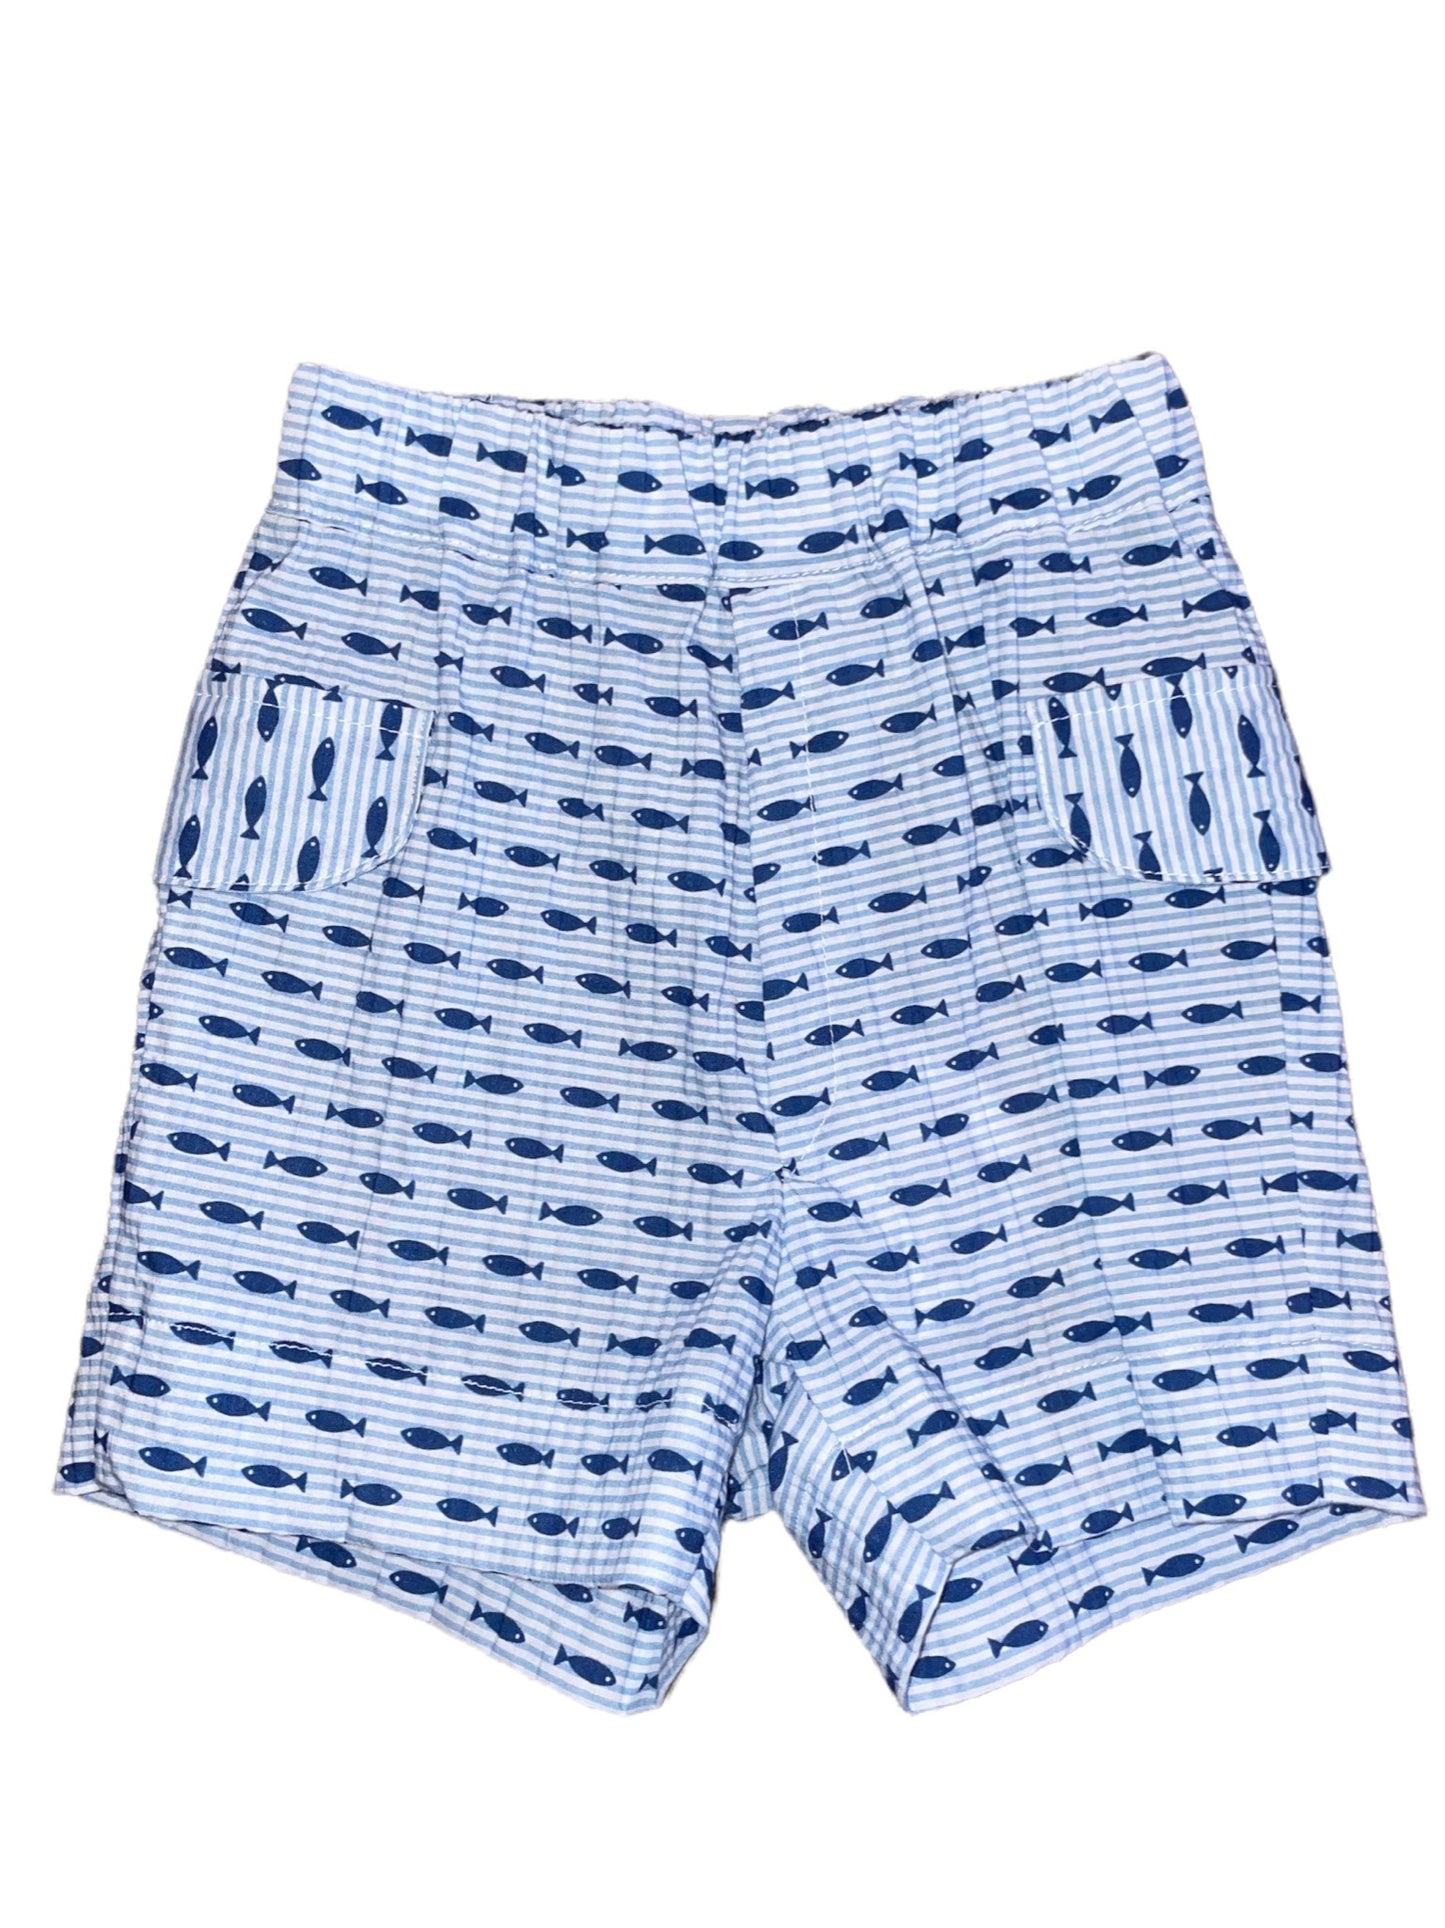 Baby Boy Shorts - Blue Fish